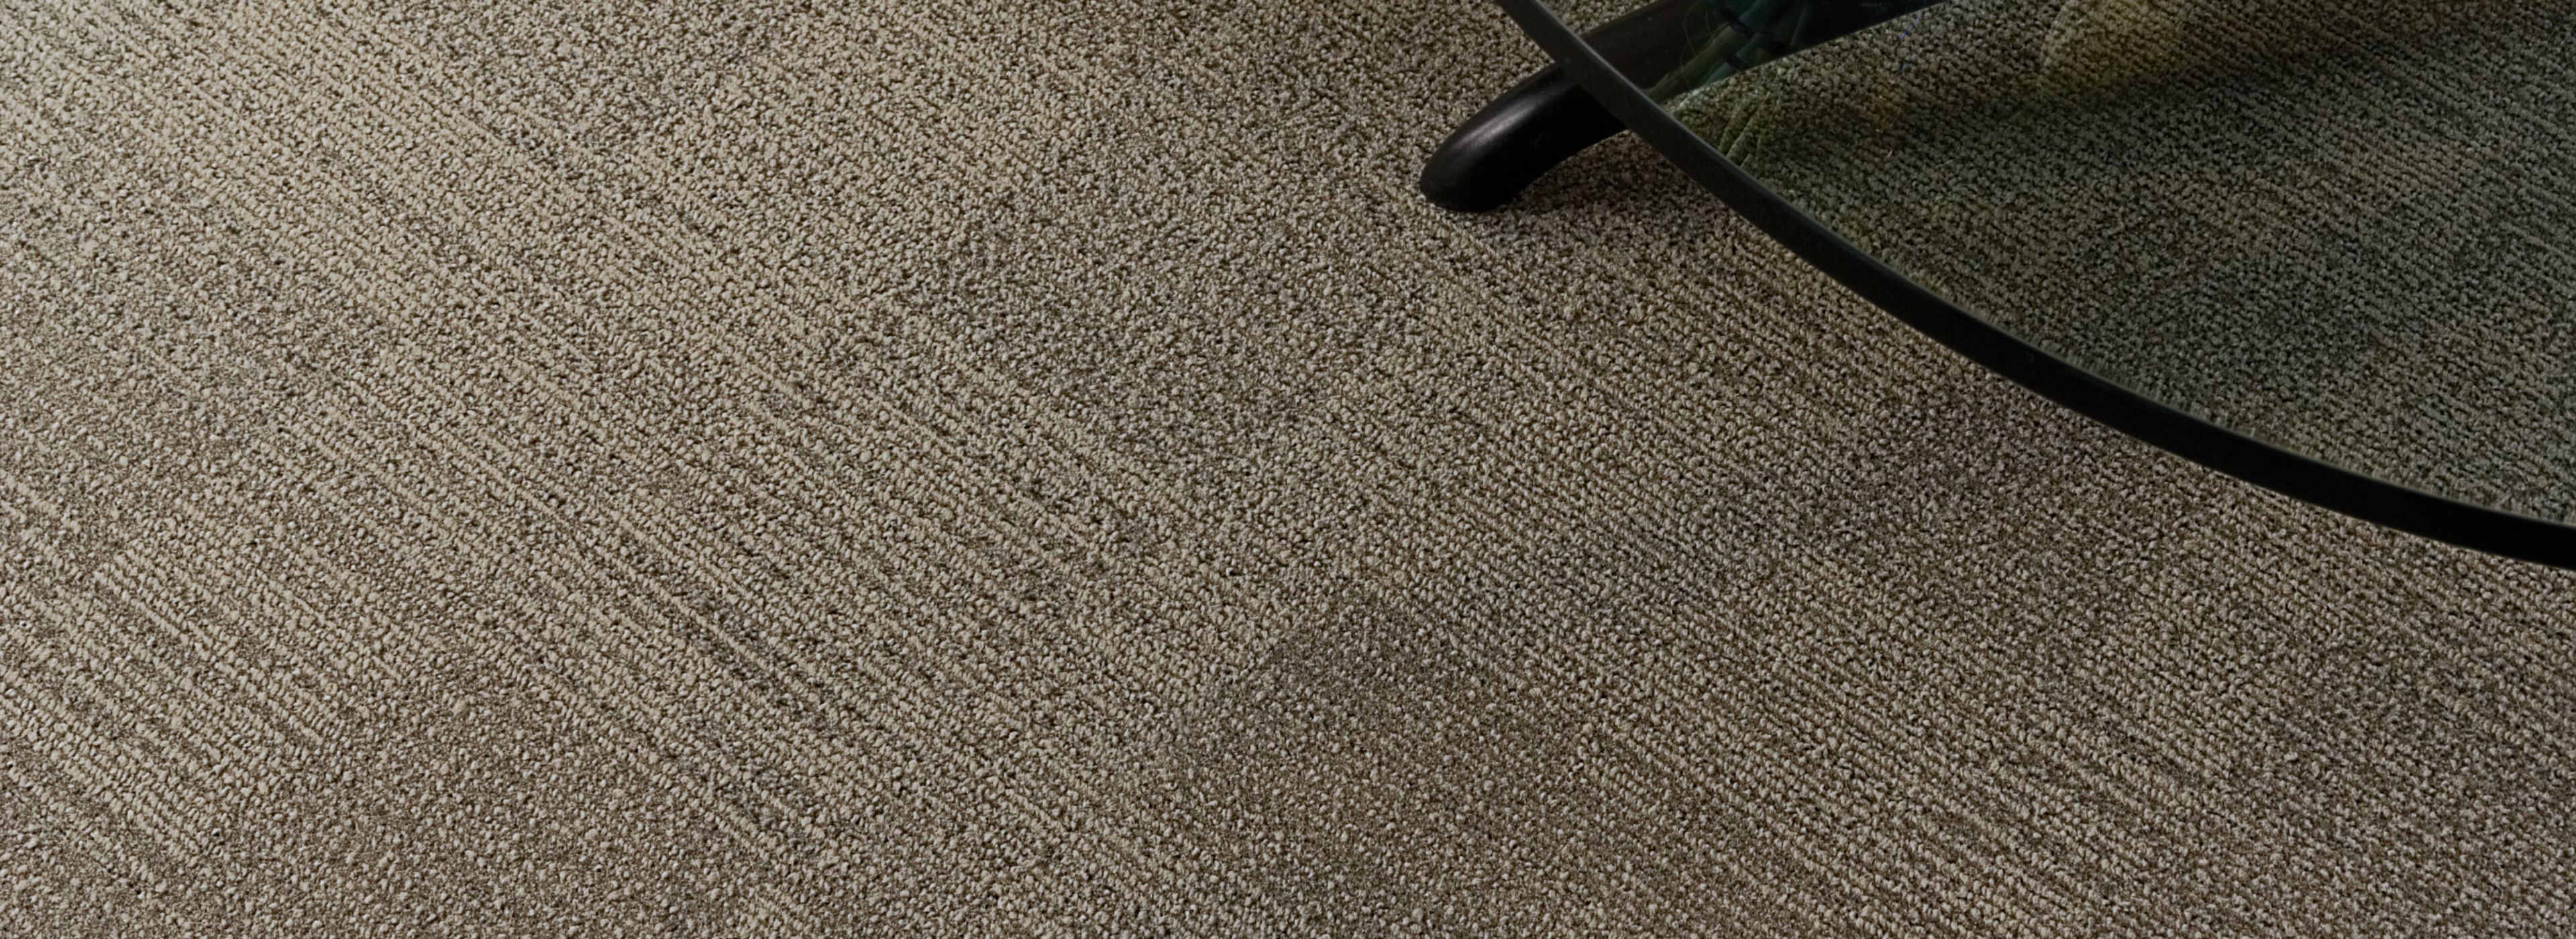 Close up of Interface Bertola carpet tile image number 1